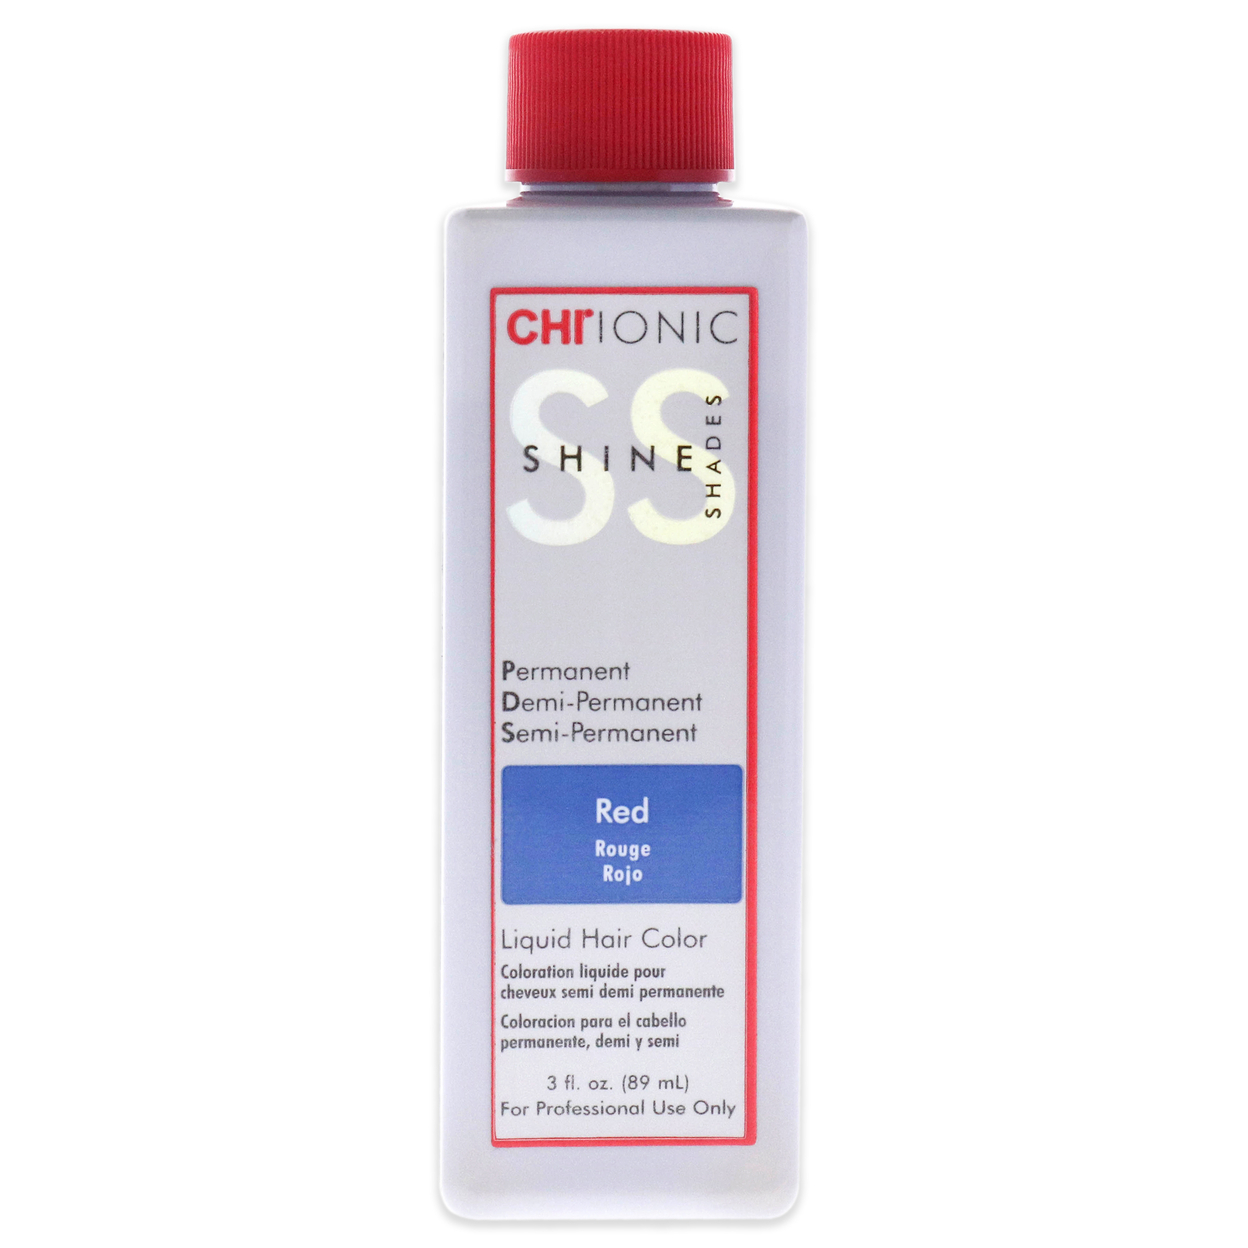 CHI Ionic Shine Shades Liquid Hair Color - Red 3 Oz